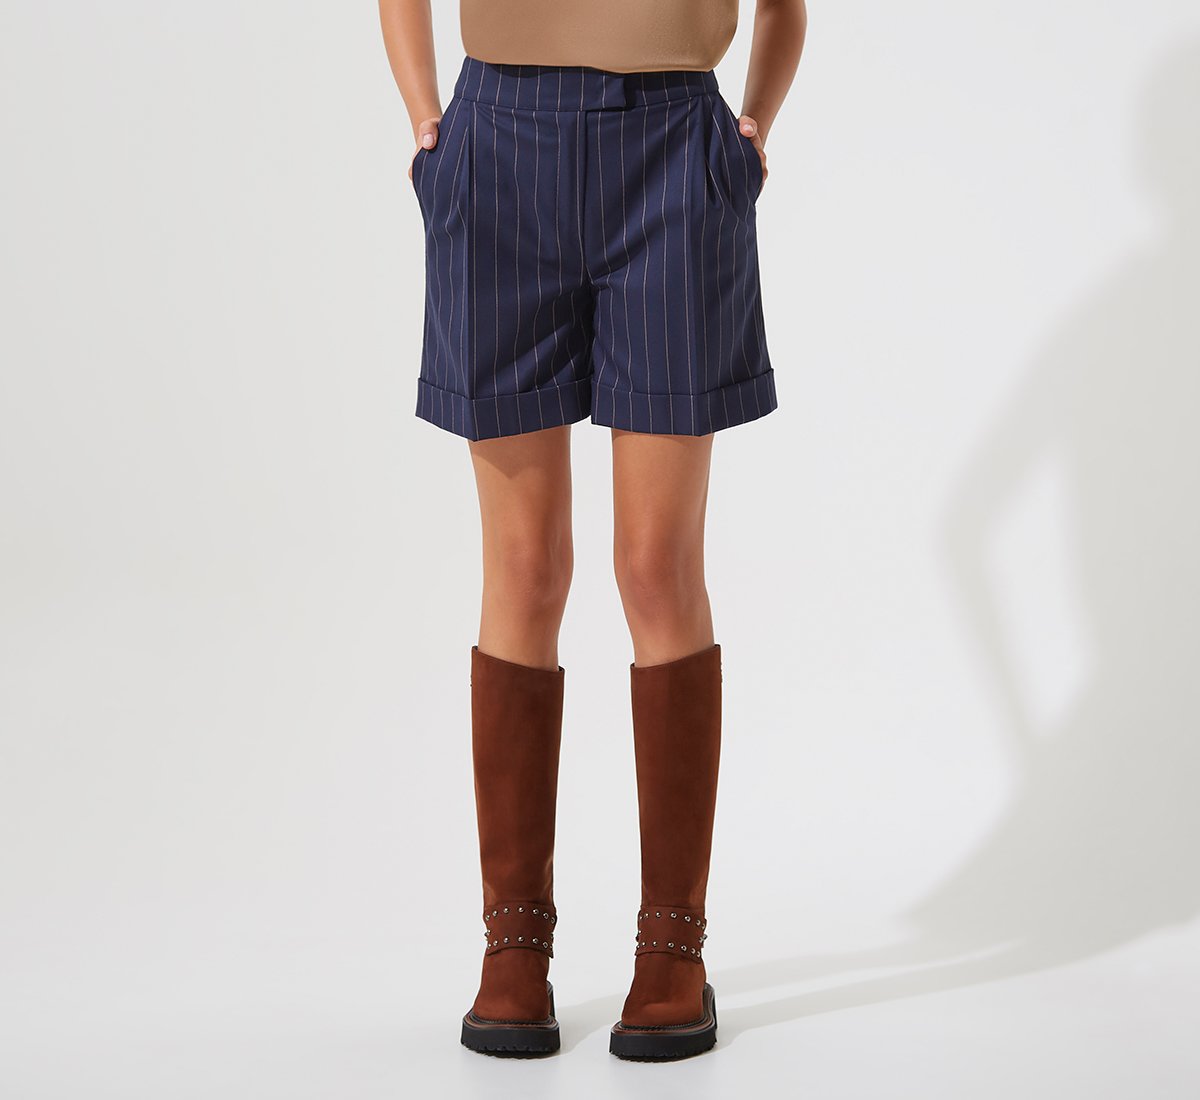 Blue pinstripe shorts